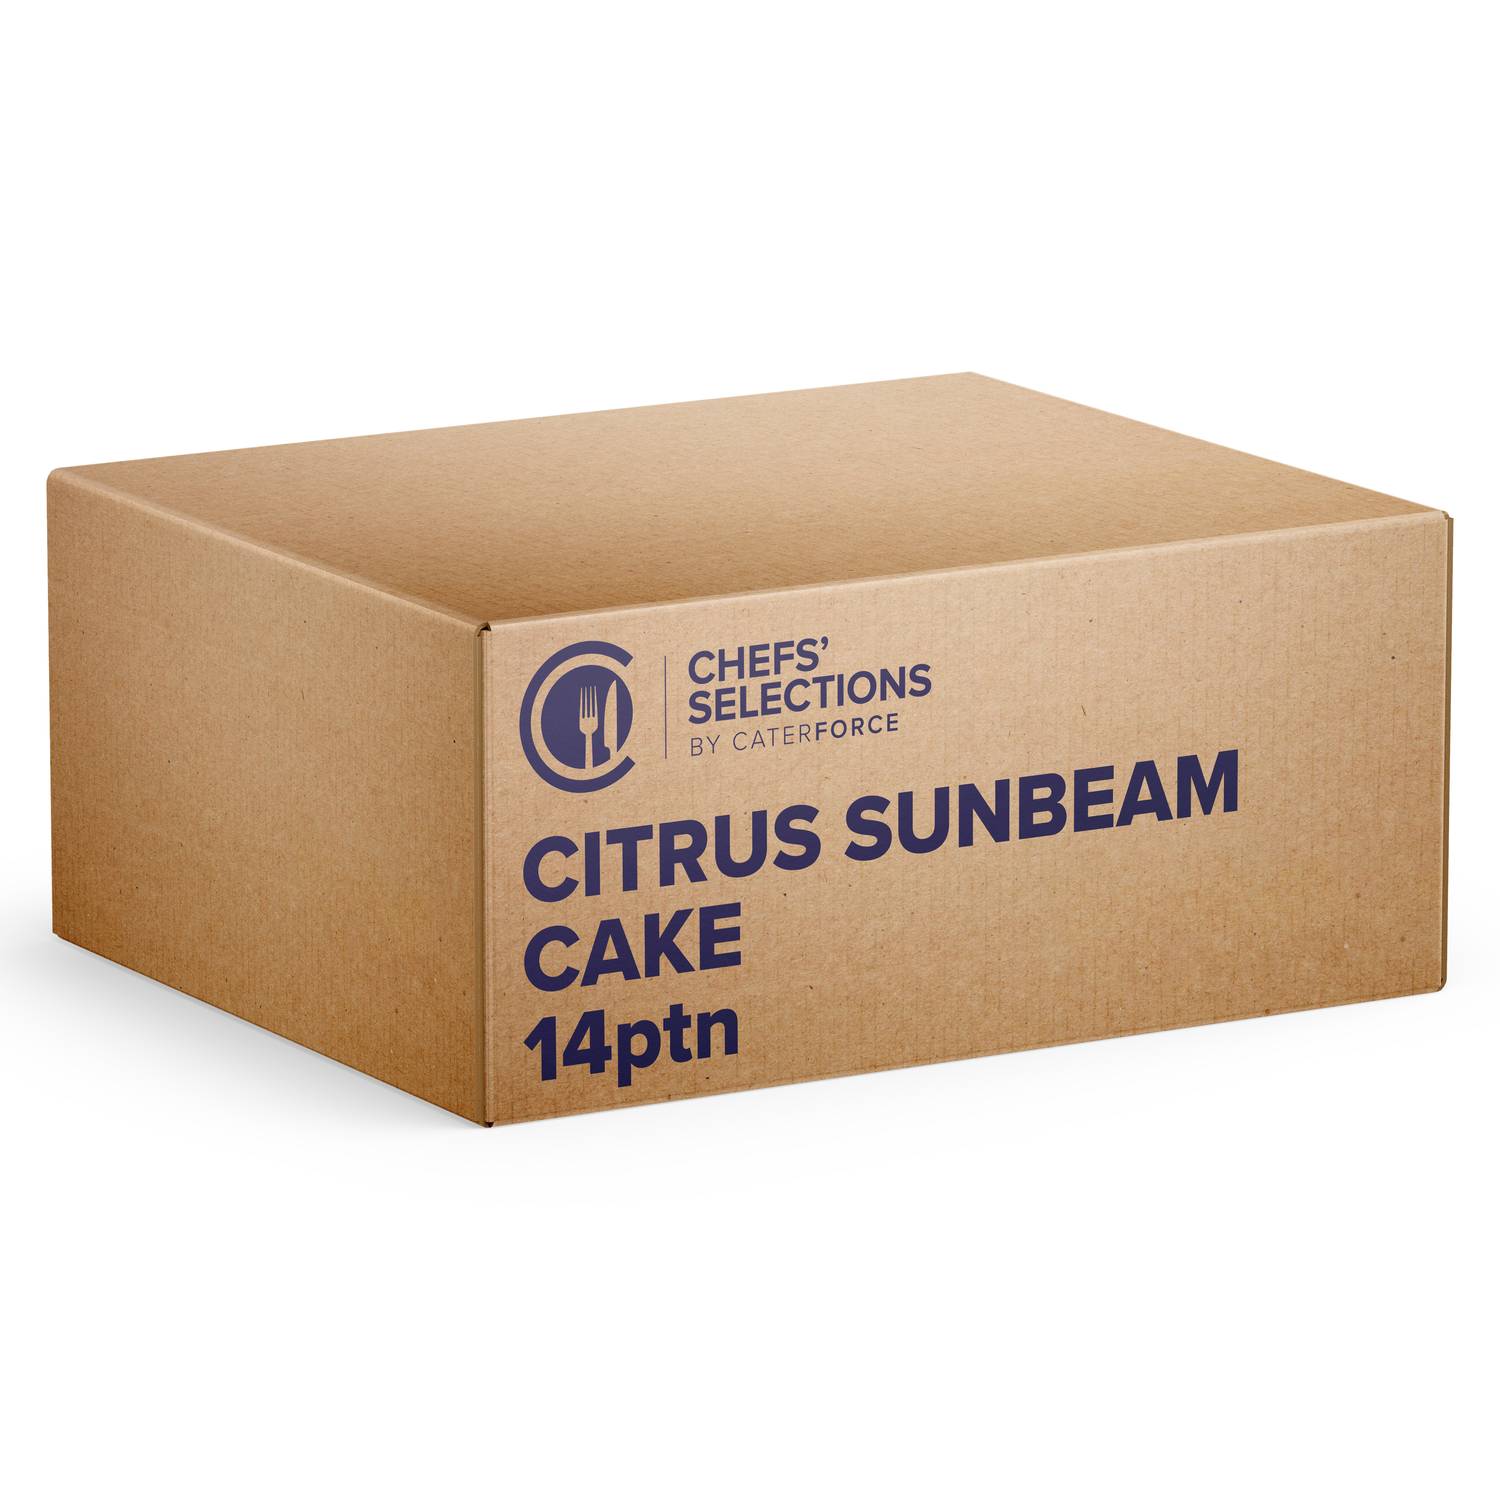 Chefs’ Selections Citrus Sunbeam Cake (1 x 16p/ptn)